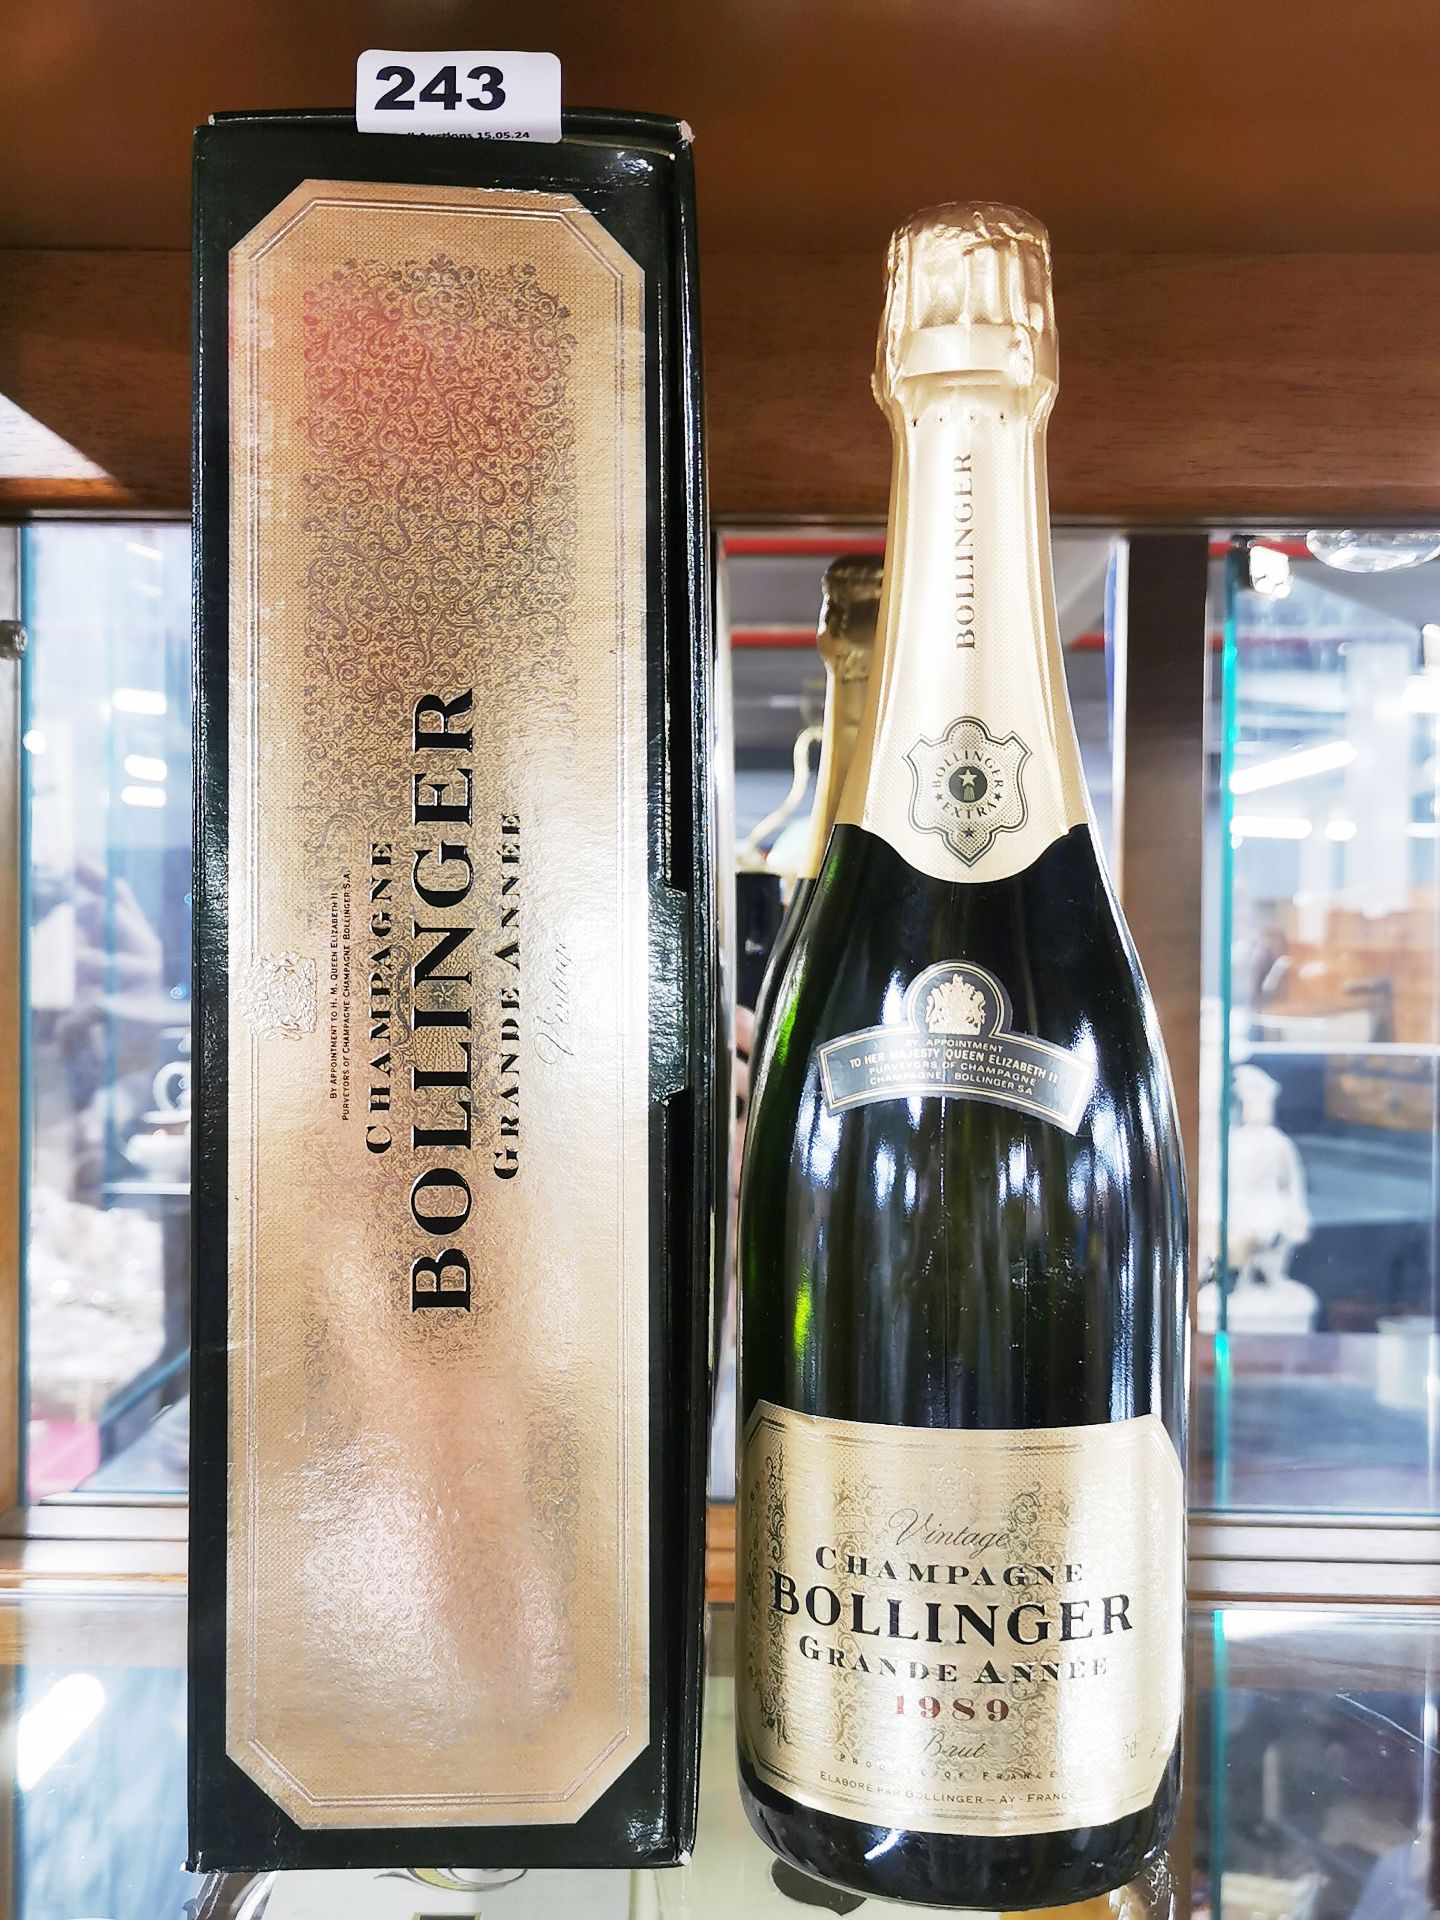 A bottle of Bollinger champagne.